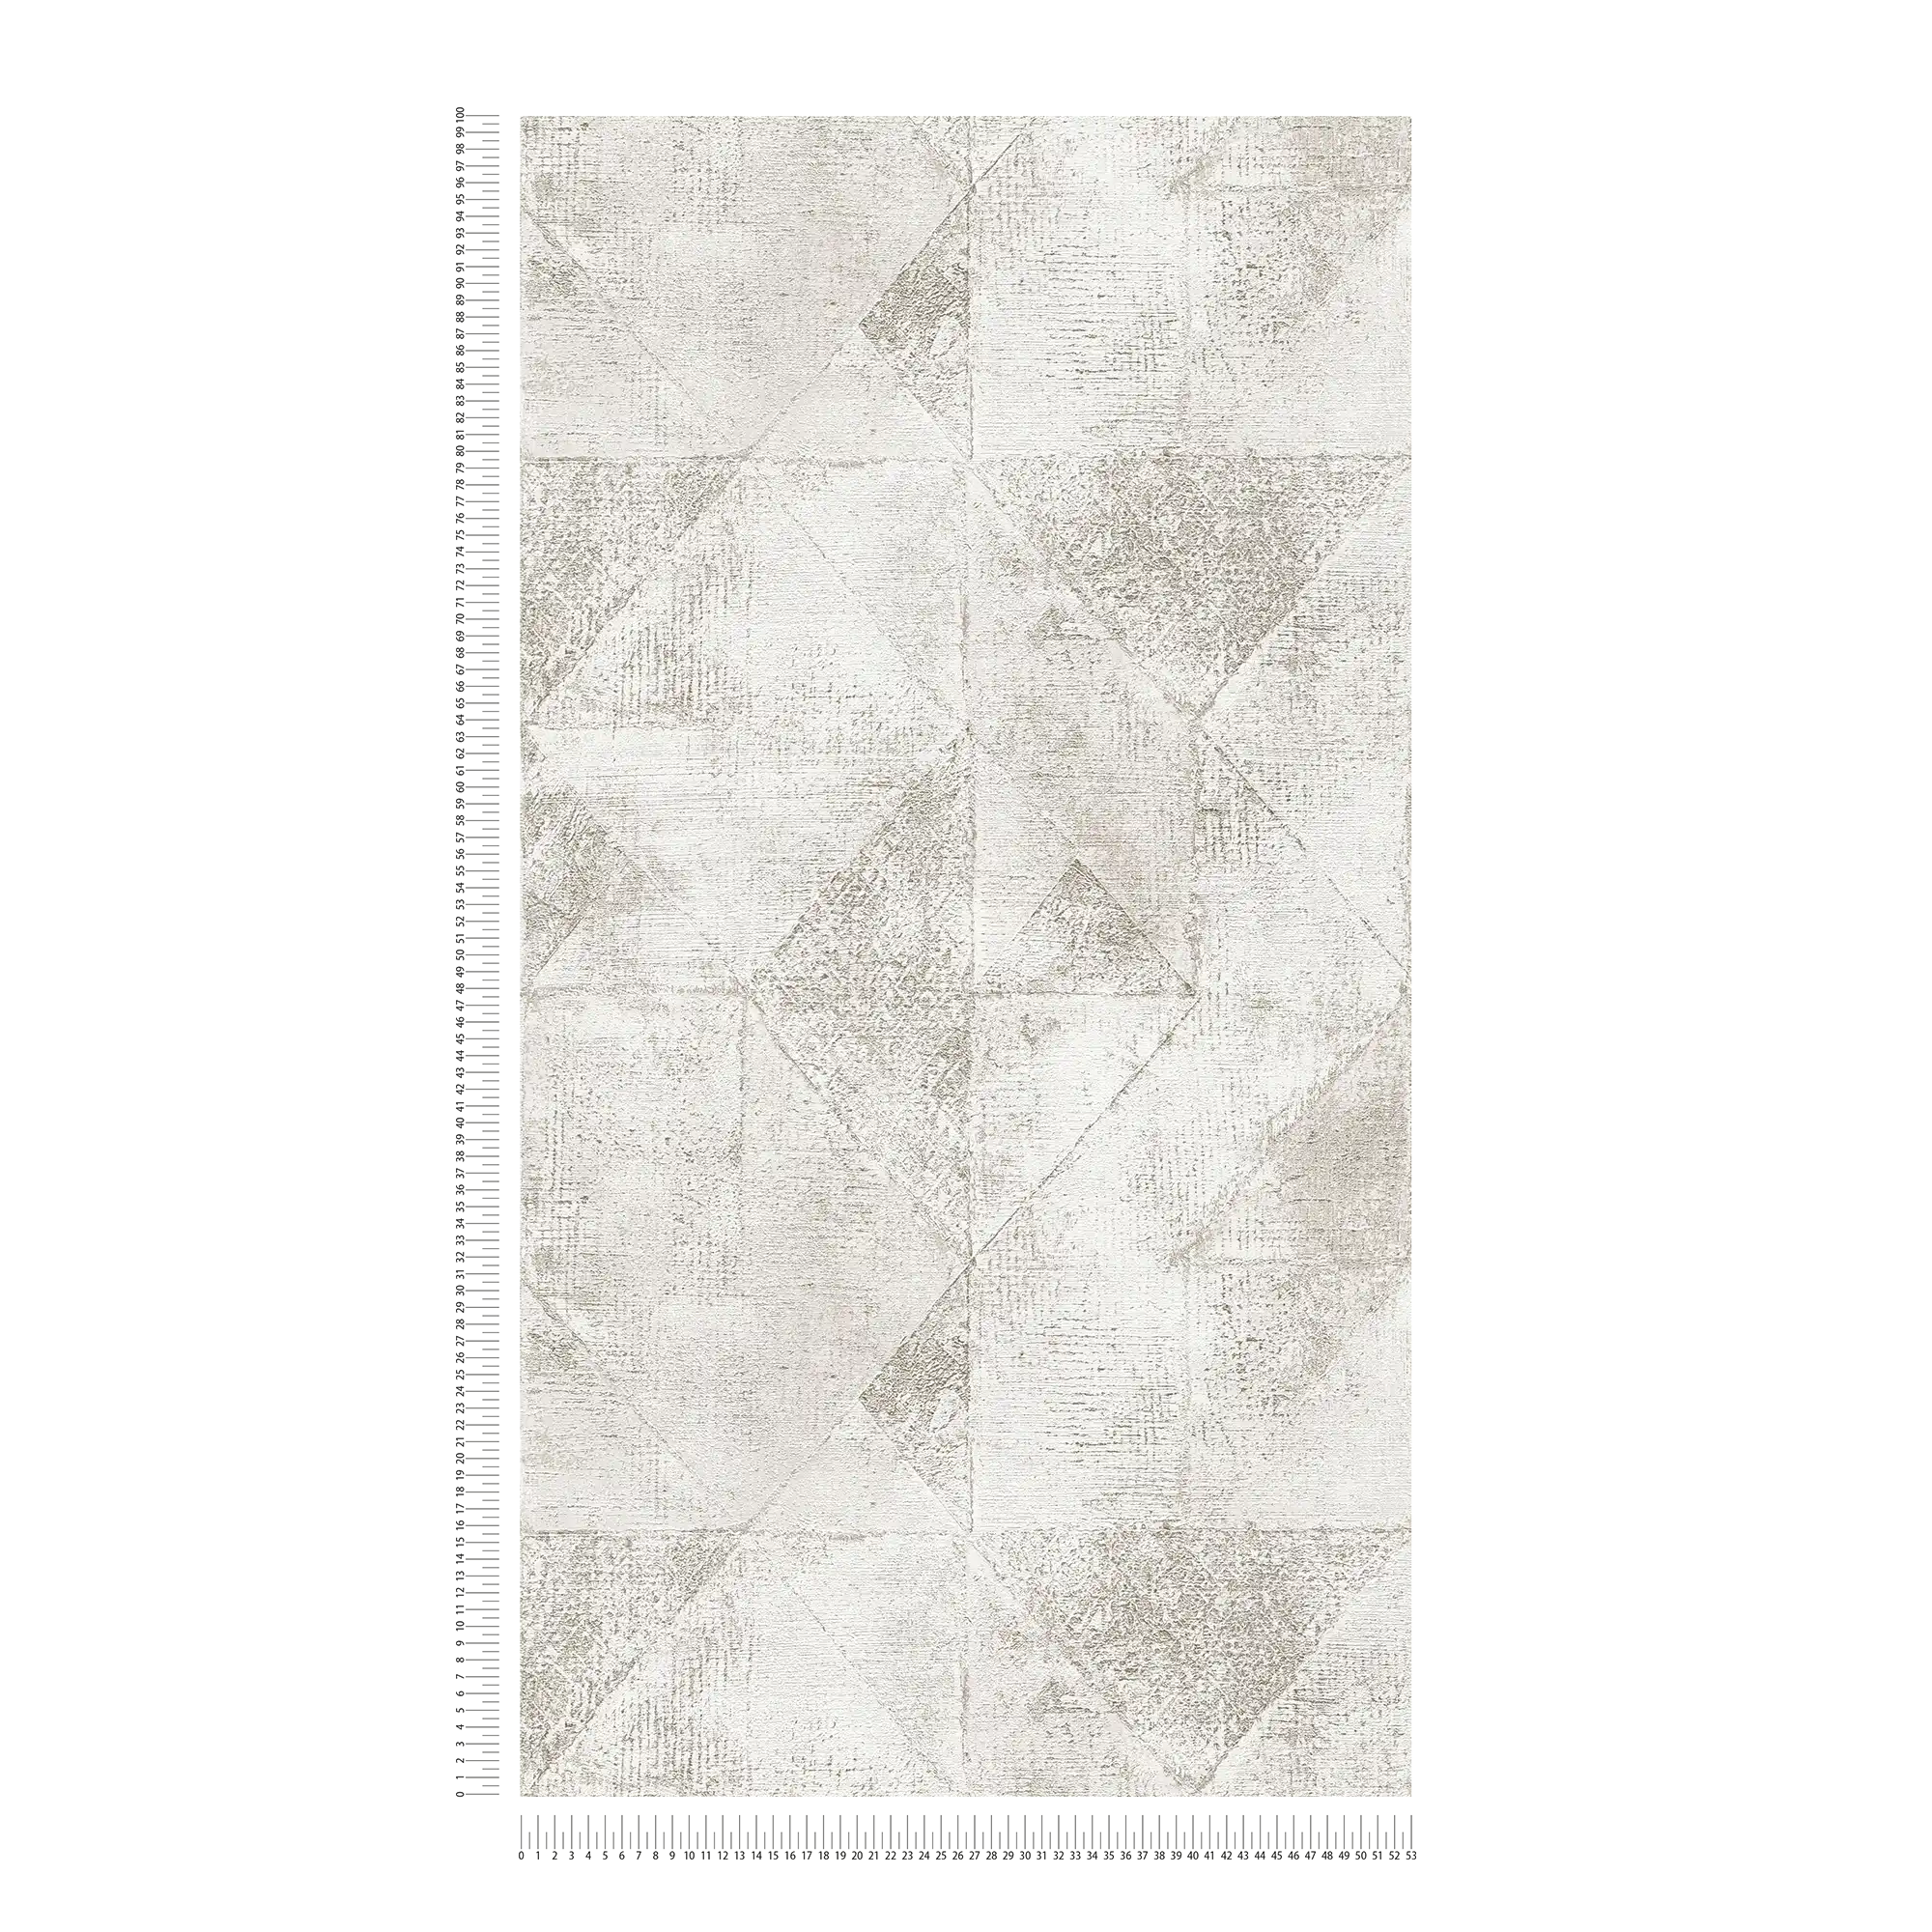             Papel pintado con motivo gráfico triangular metalizado textura brillante - plata, blanco
        